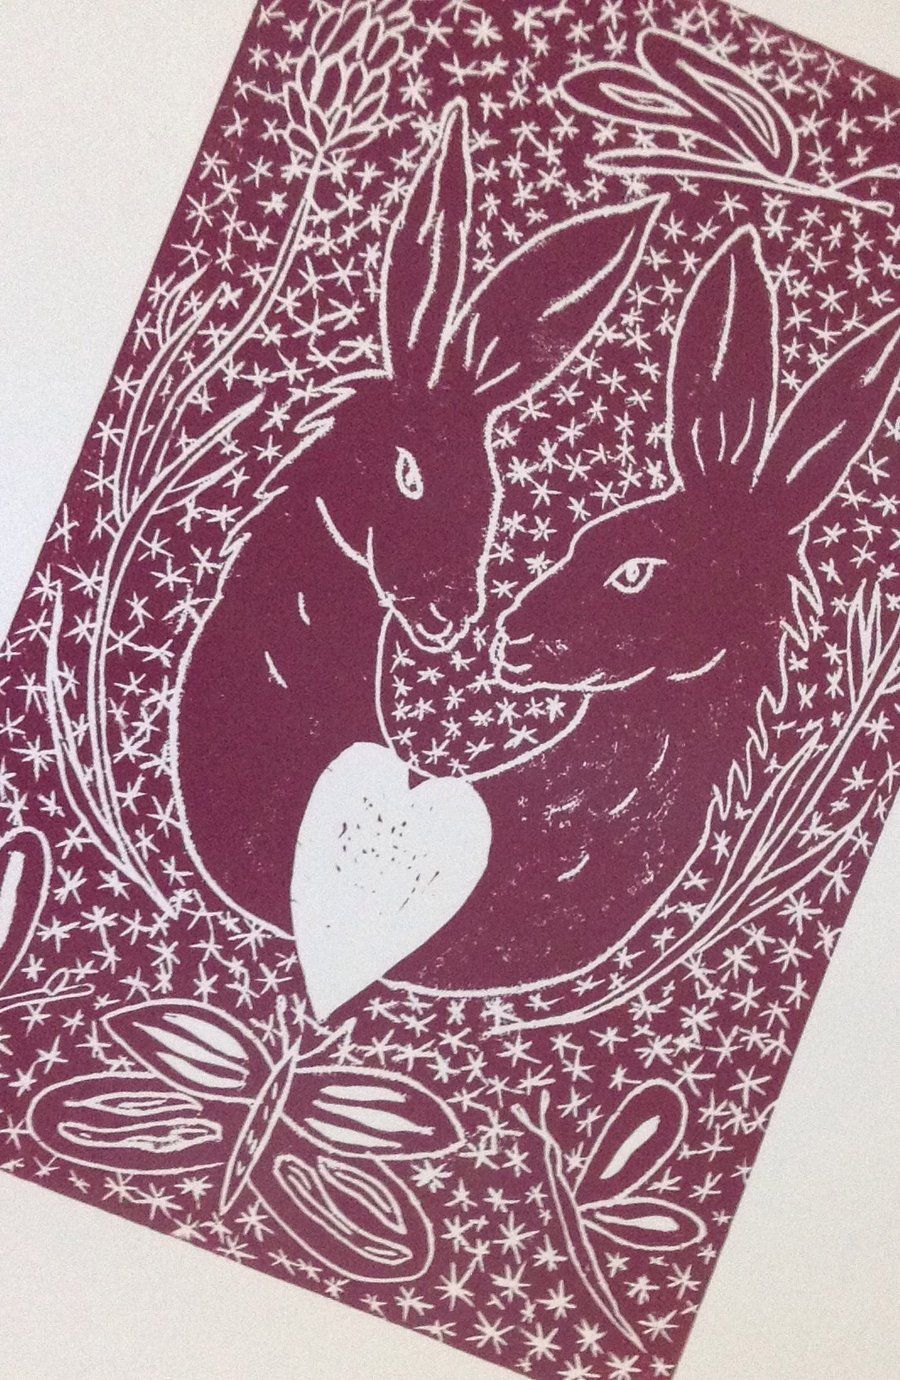 Linocut Hare 4 You artwork